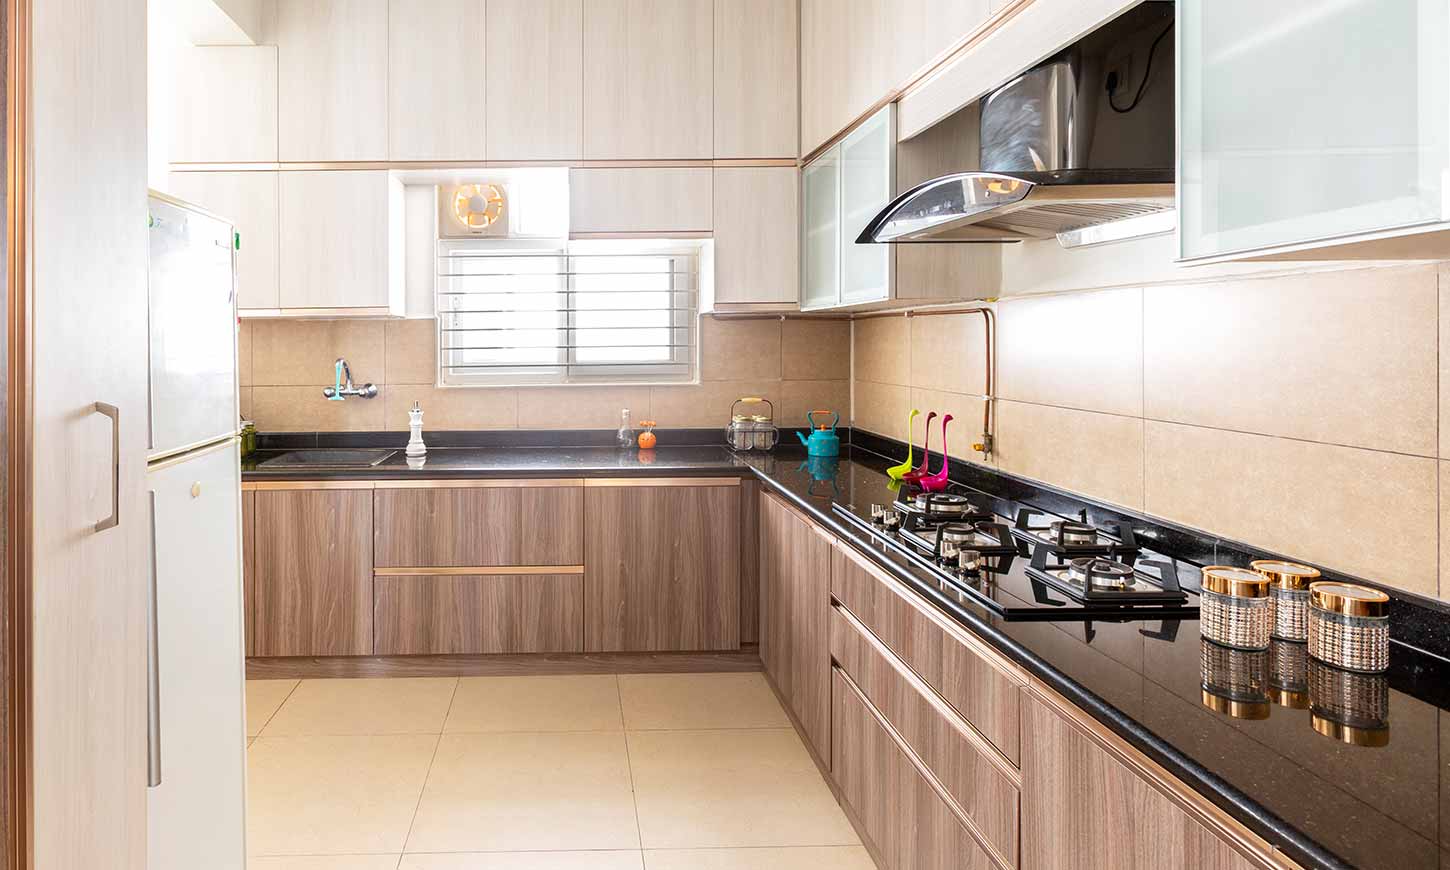 Modular kitchen designed by interior designers & decorators in bangalore